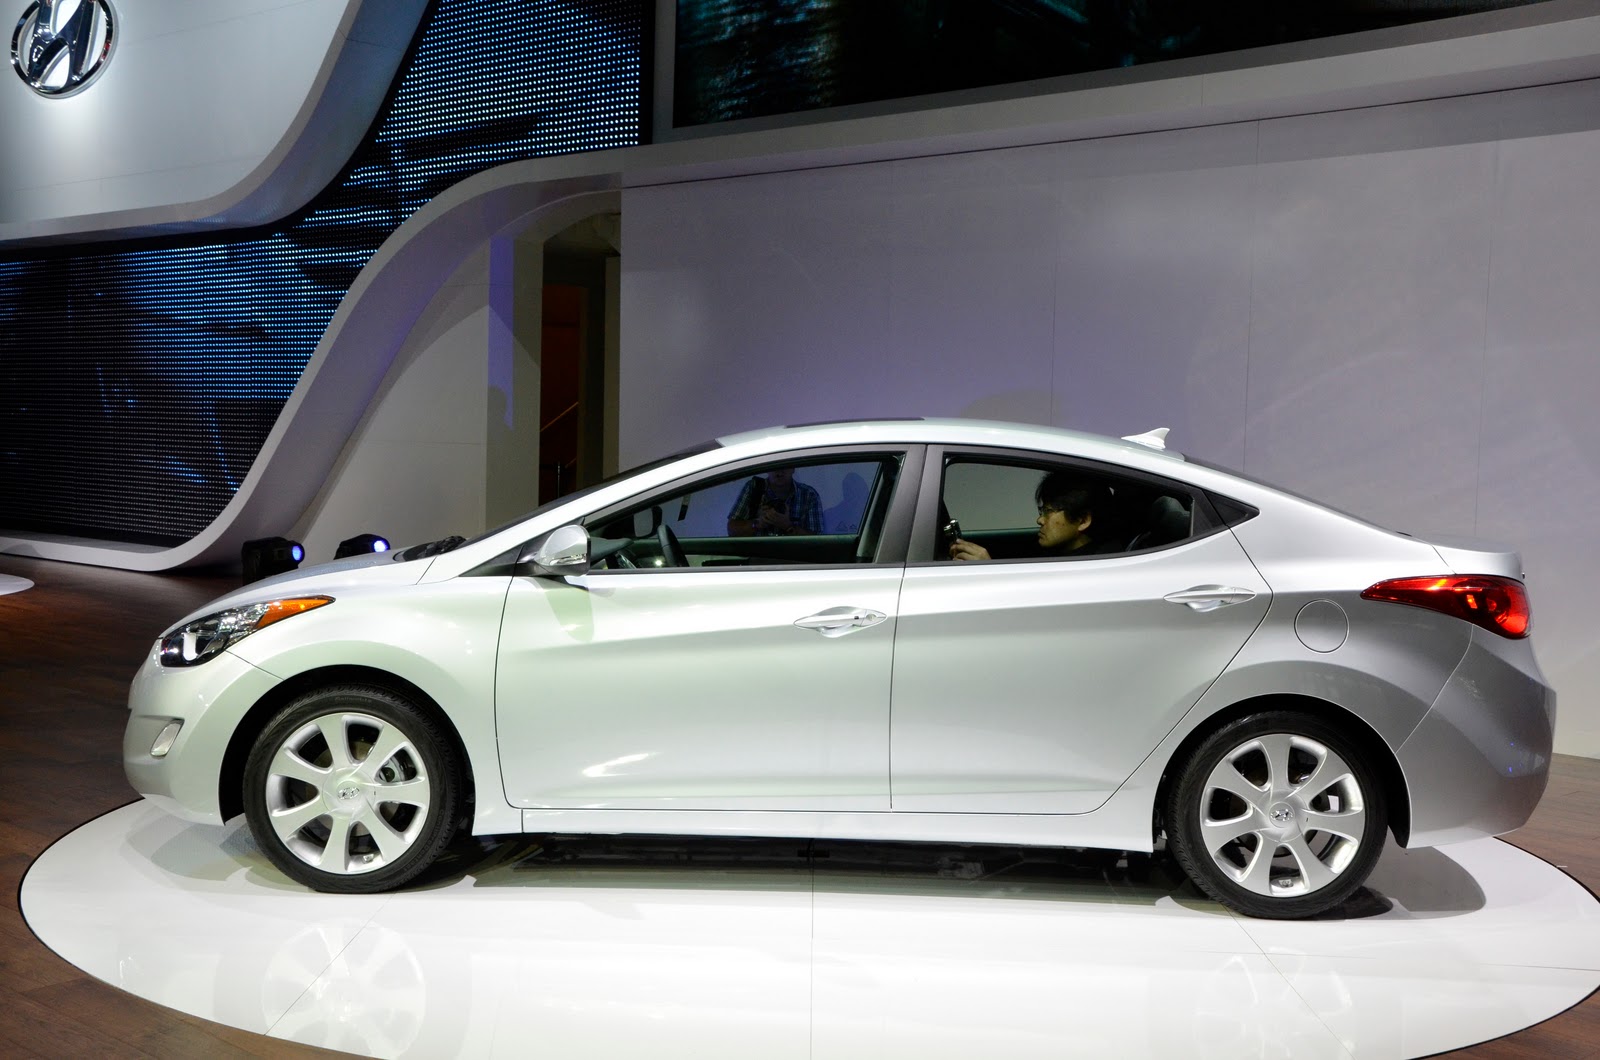 Hyundai Elantra 2012 Review Malaysia